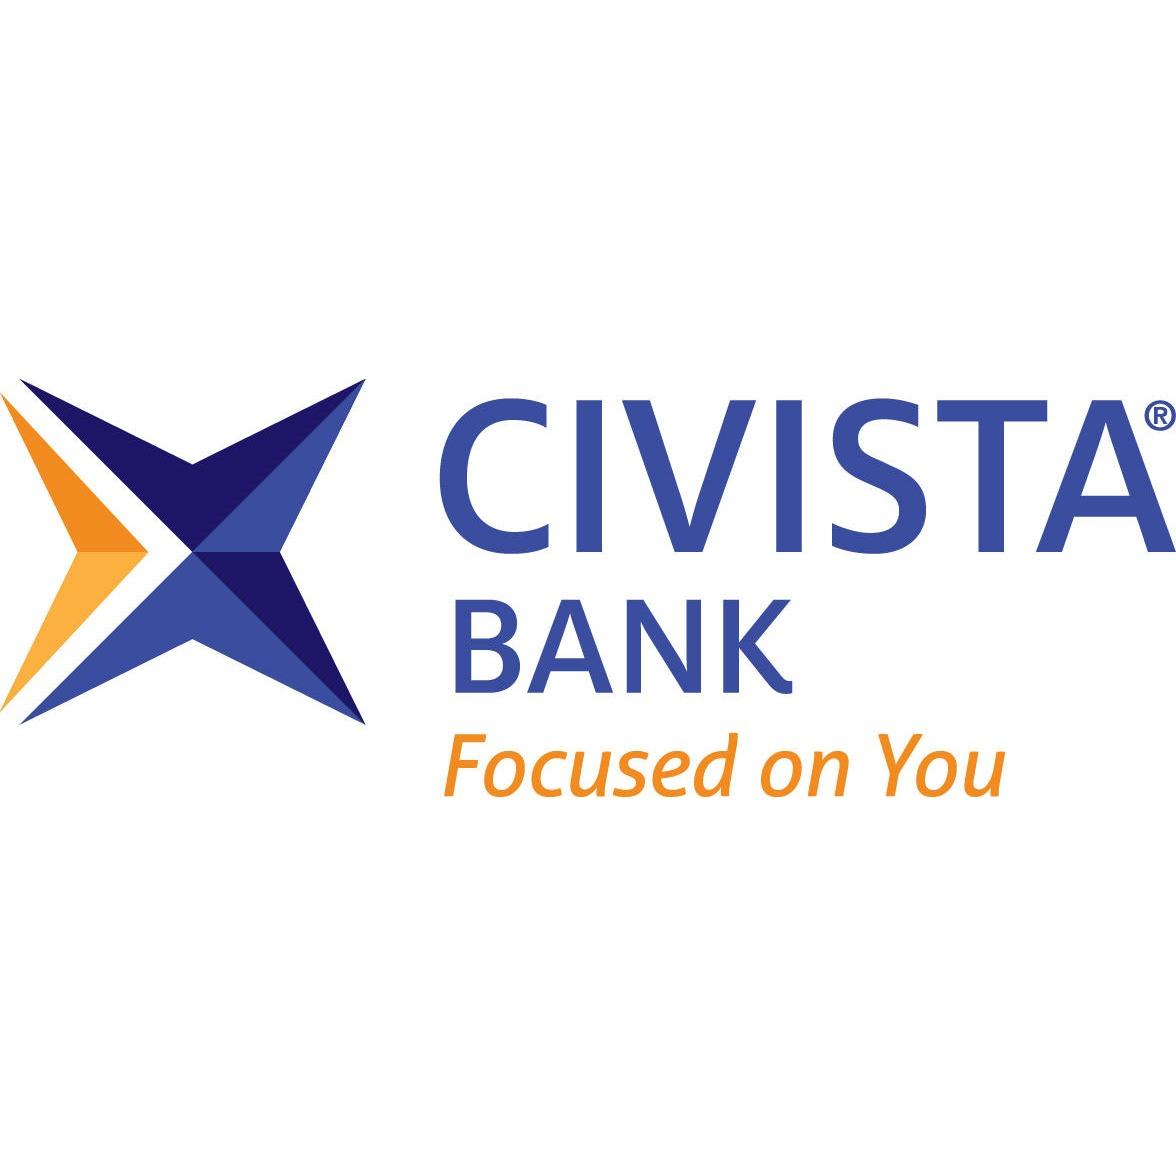 Civista Bank Loan Production Office Photo